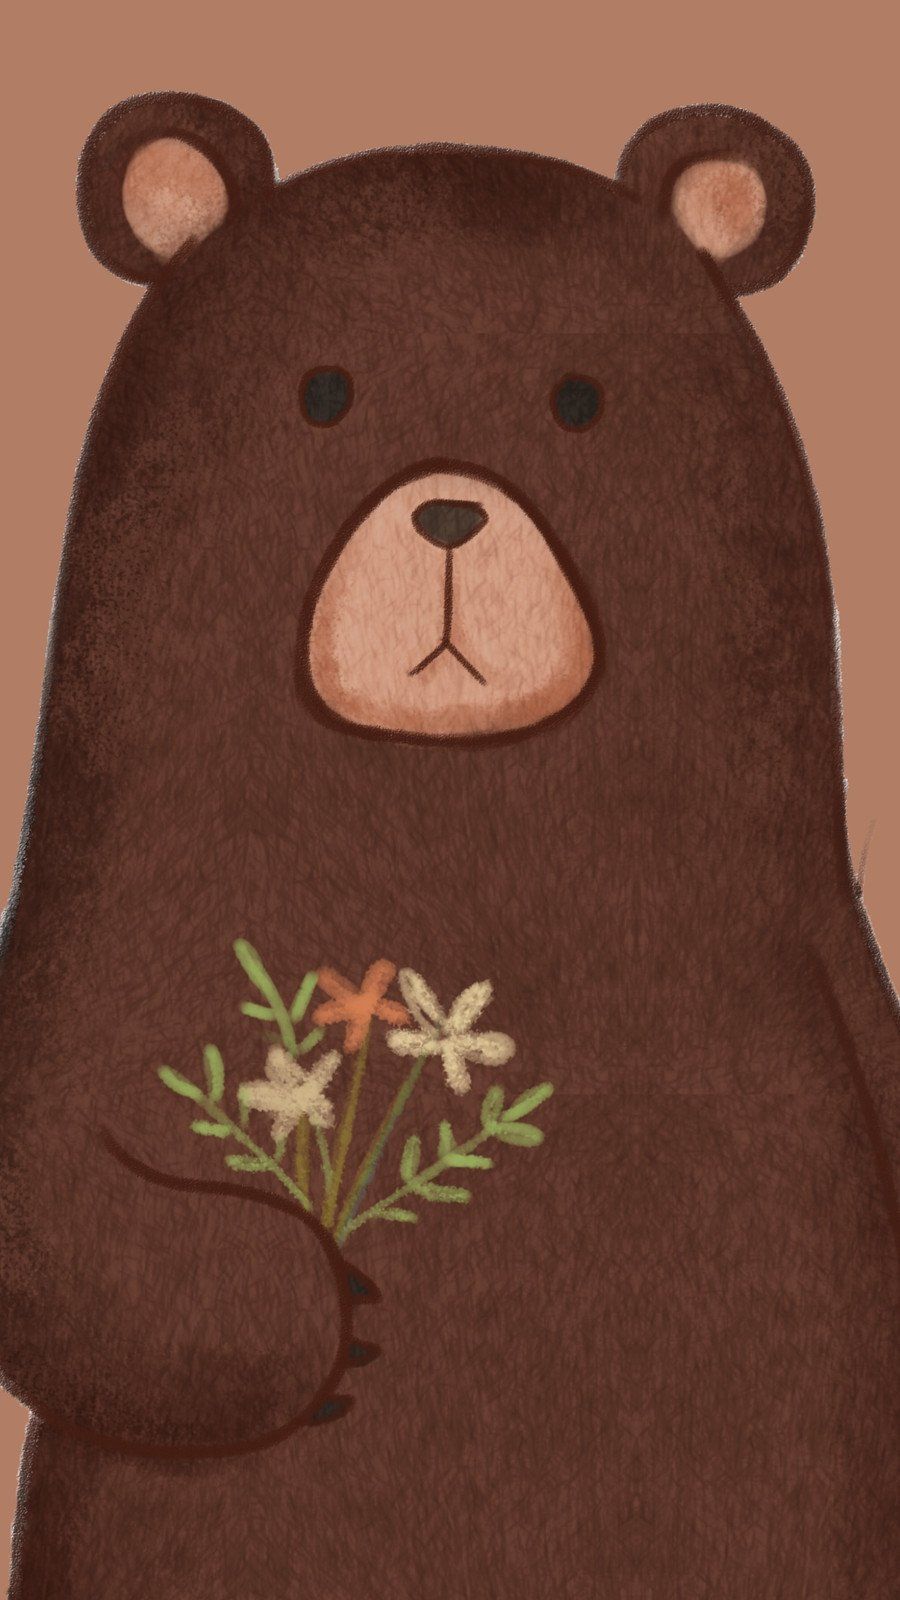 A brown bear holding a bouquet of flowers. - Teddy bear